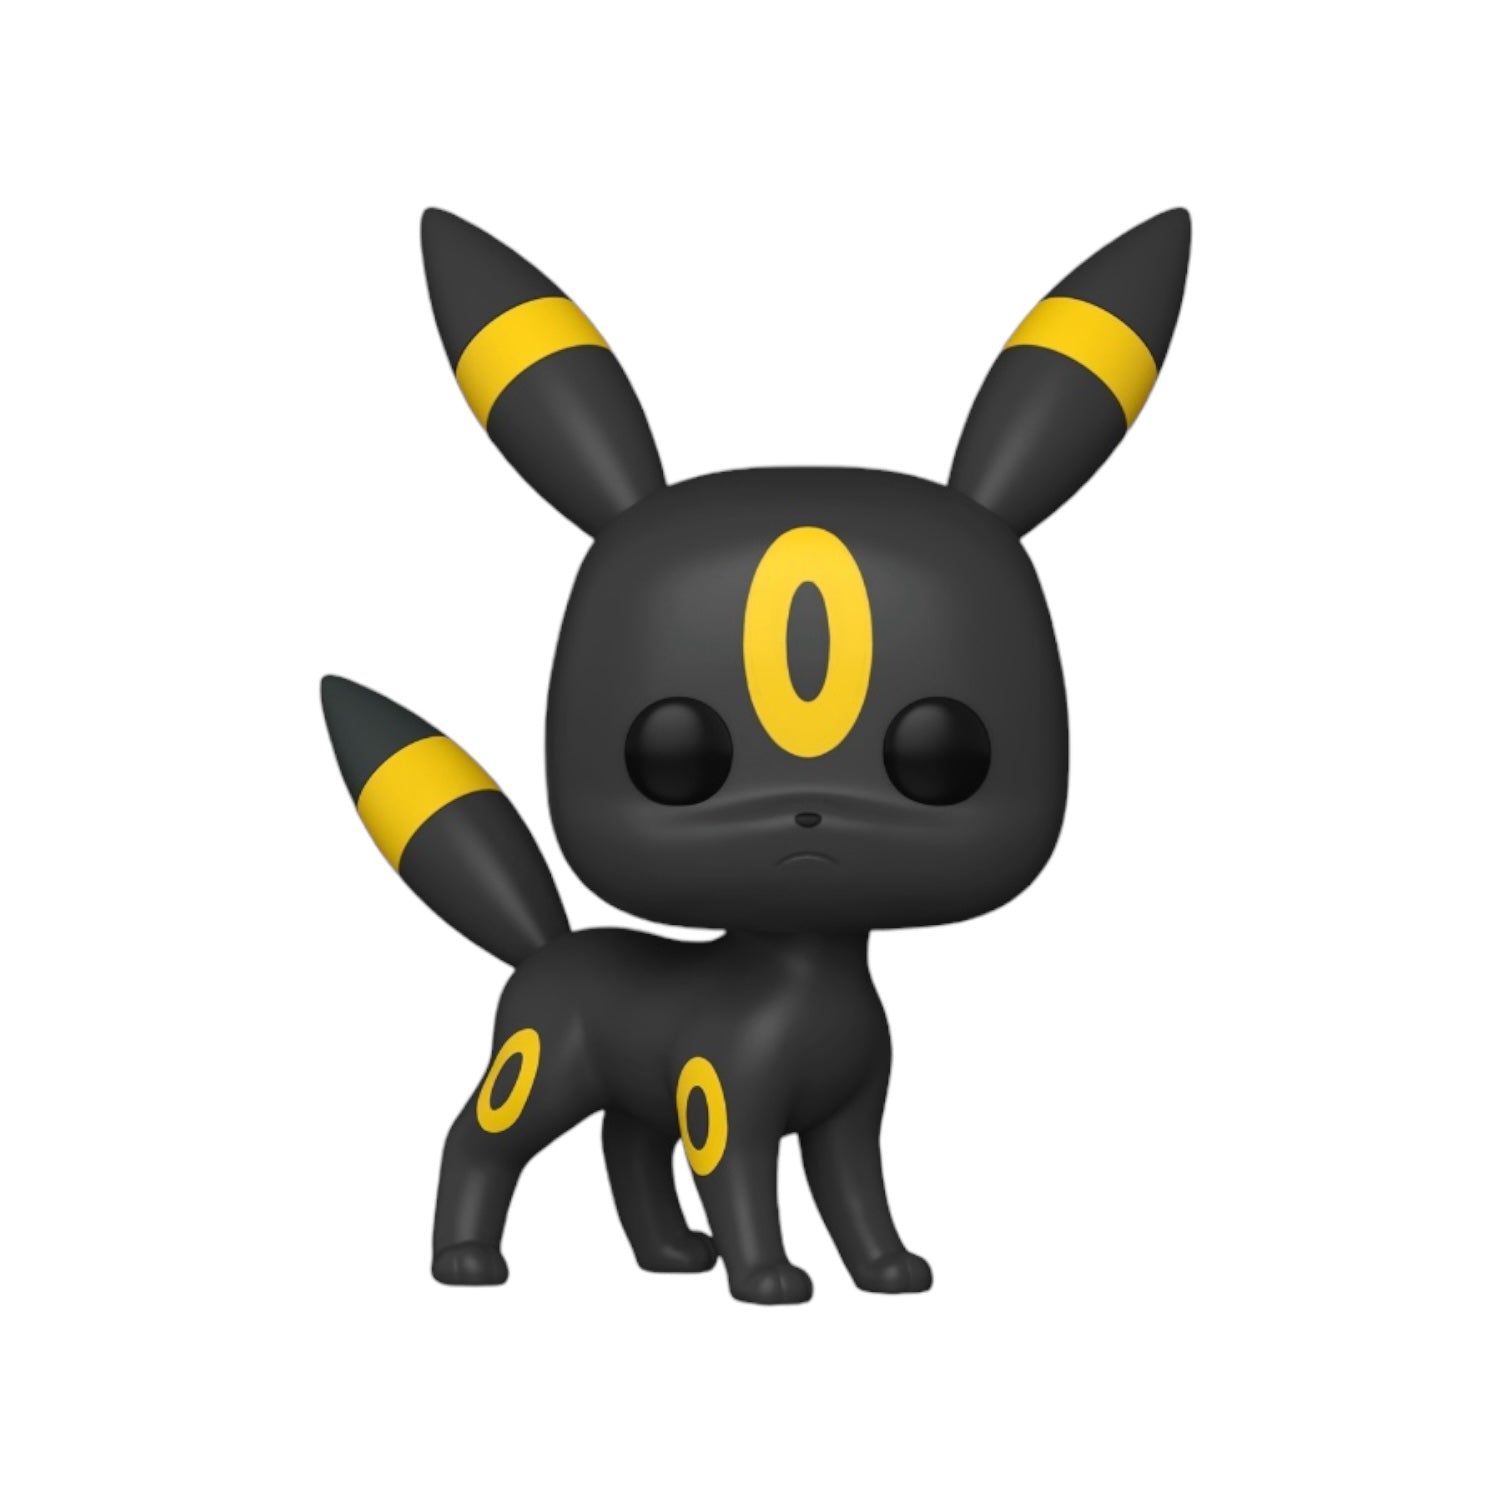 Umbreon #950 Funko 10" Pop! - Pokémon